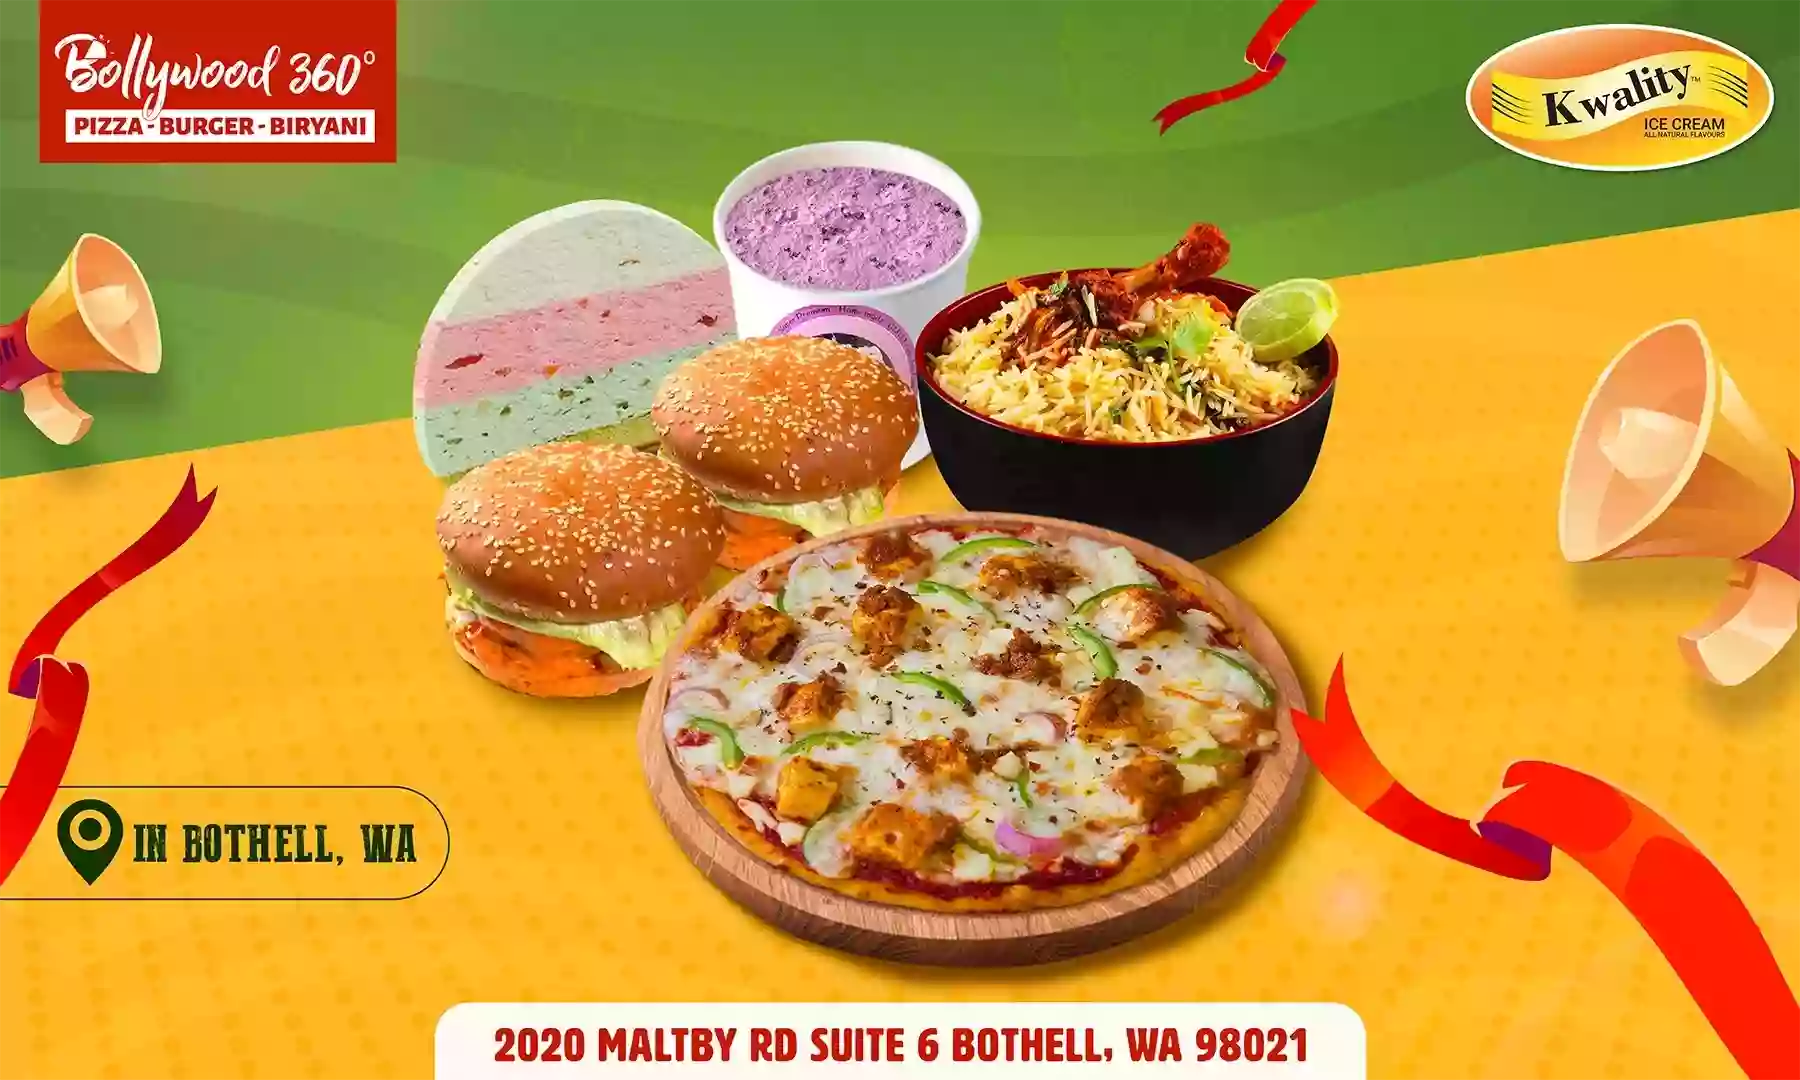 Bollywood 360 Pizza & Kwality Ice Cream